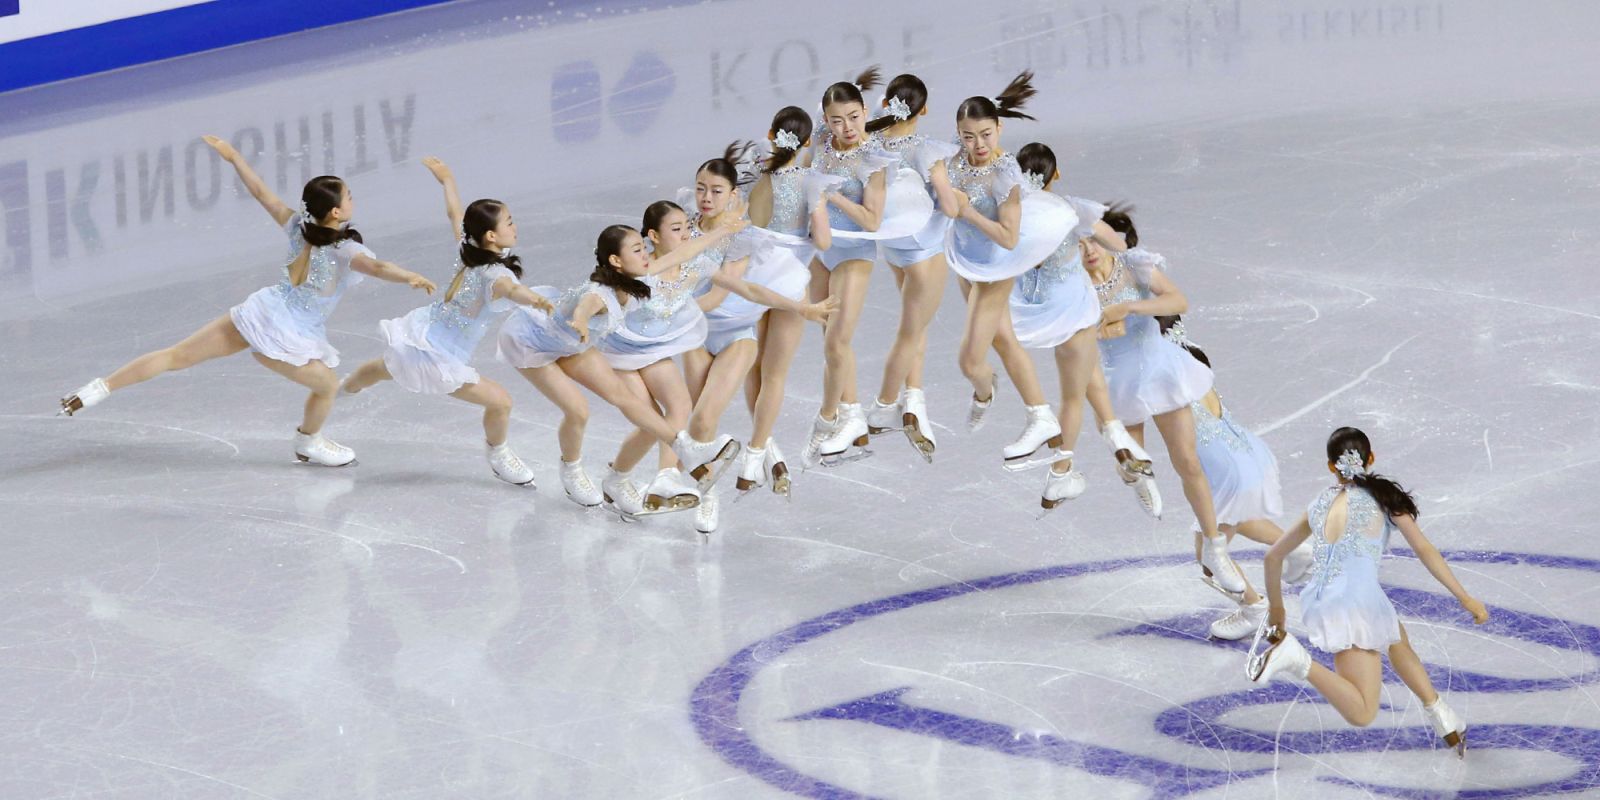 Rika Kihira: Japanese Prodigy Wins Figure Skating Grand Prix Final in Debut Season